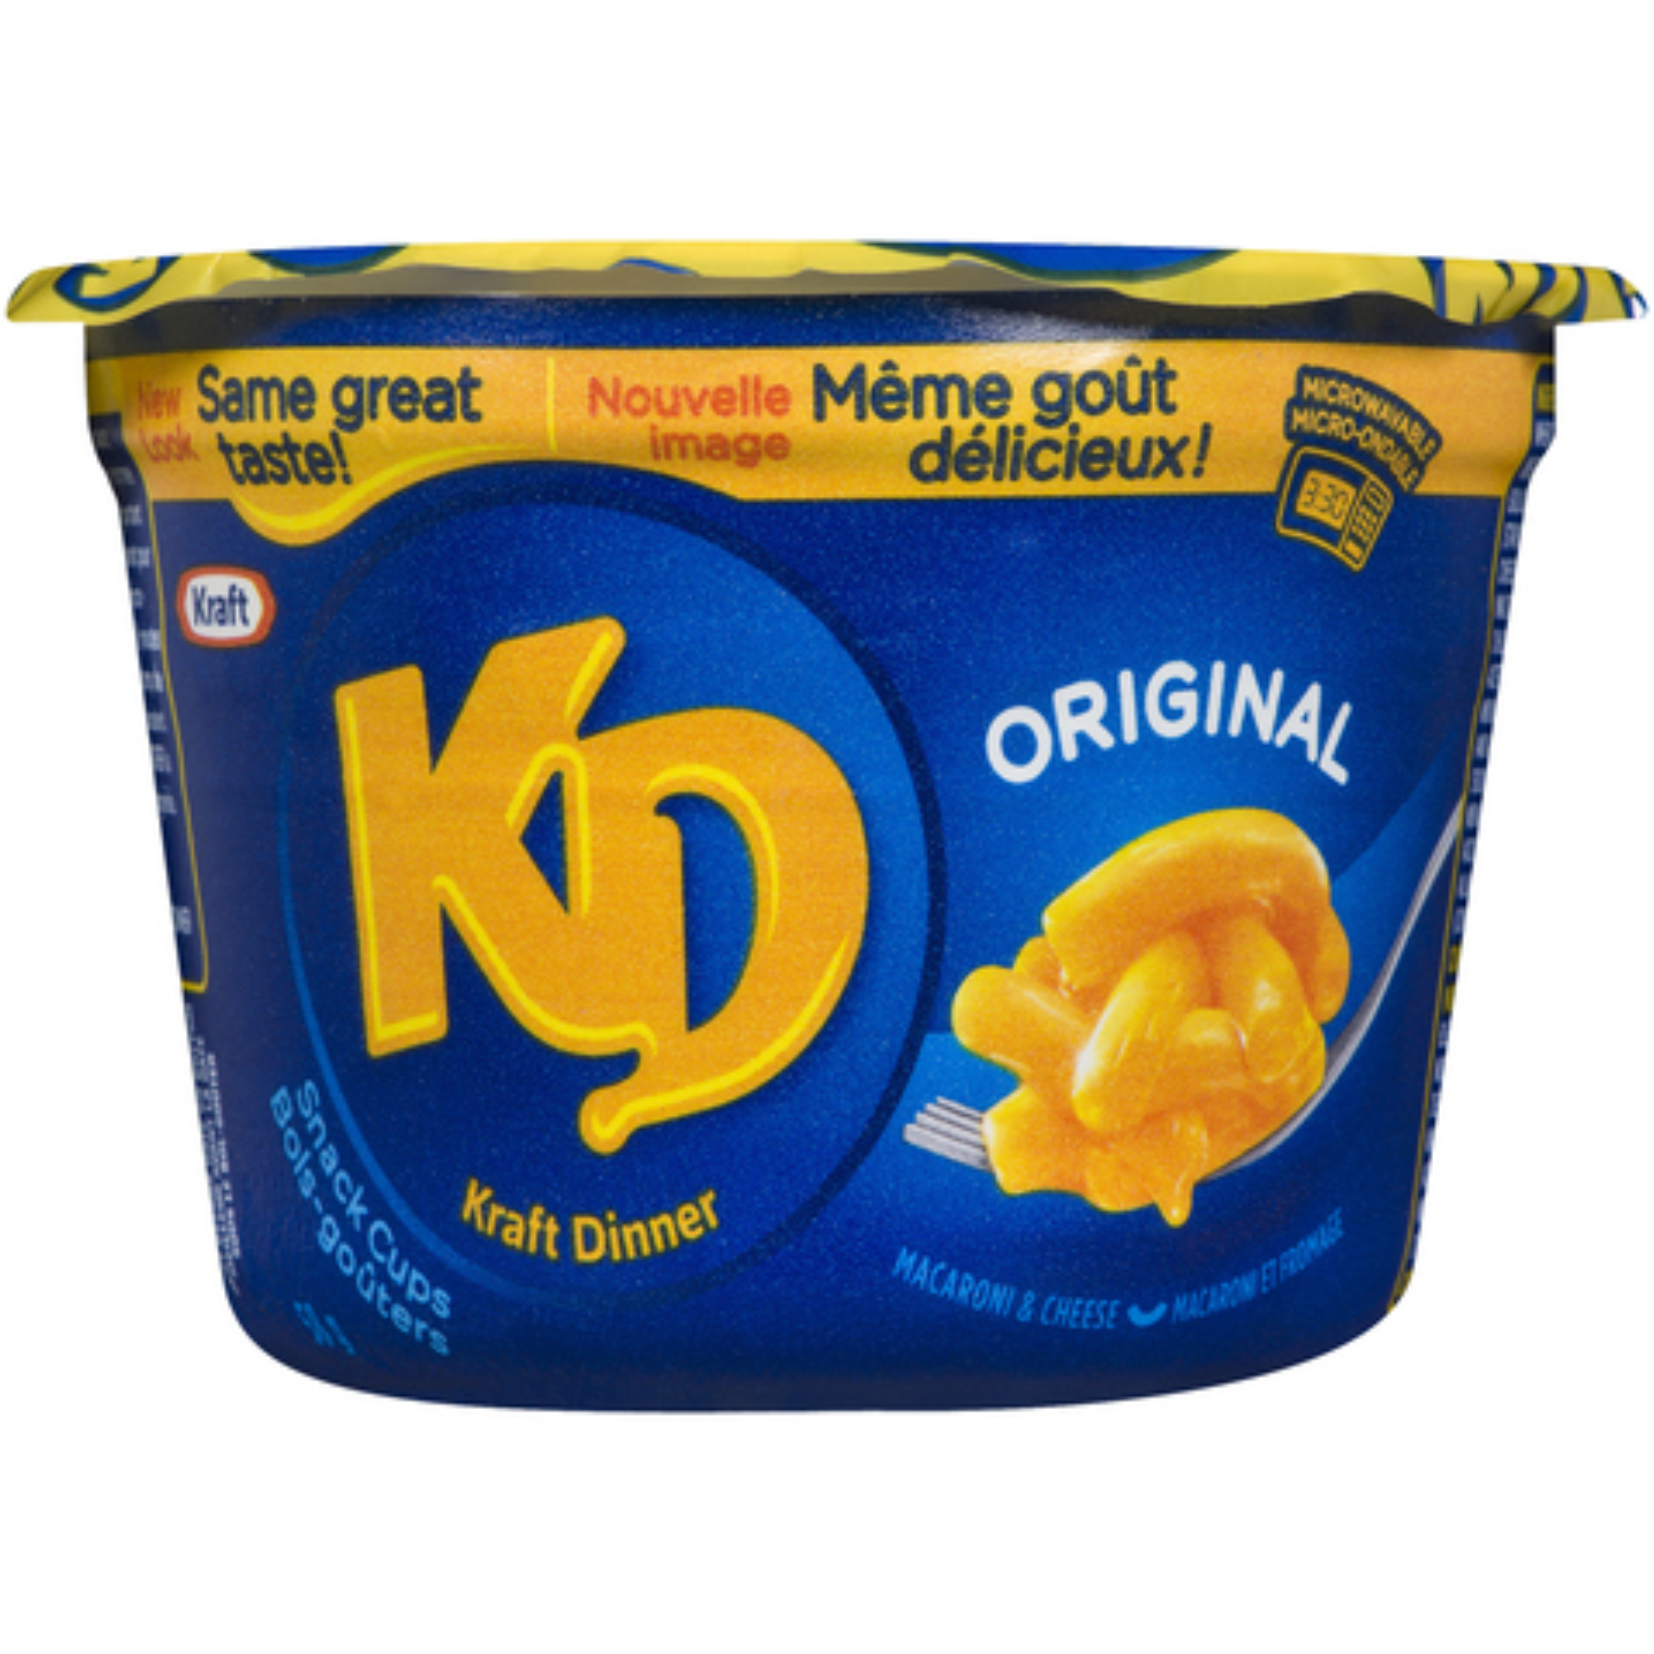 Kraft Dinner Original Macaroni & Cheese 58g